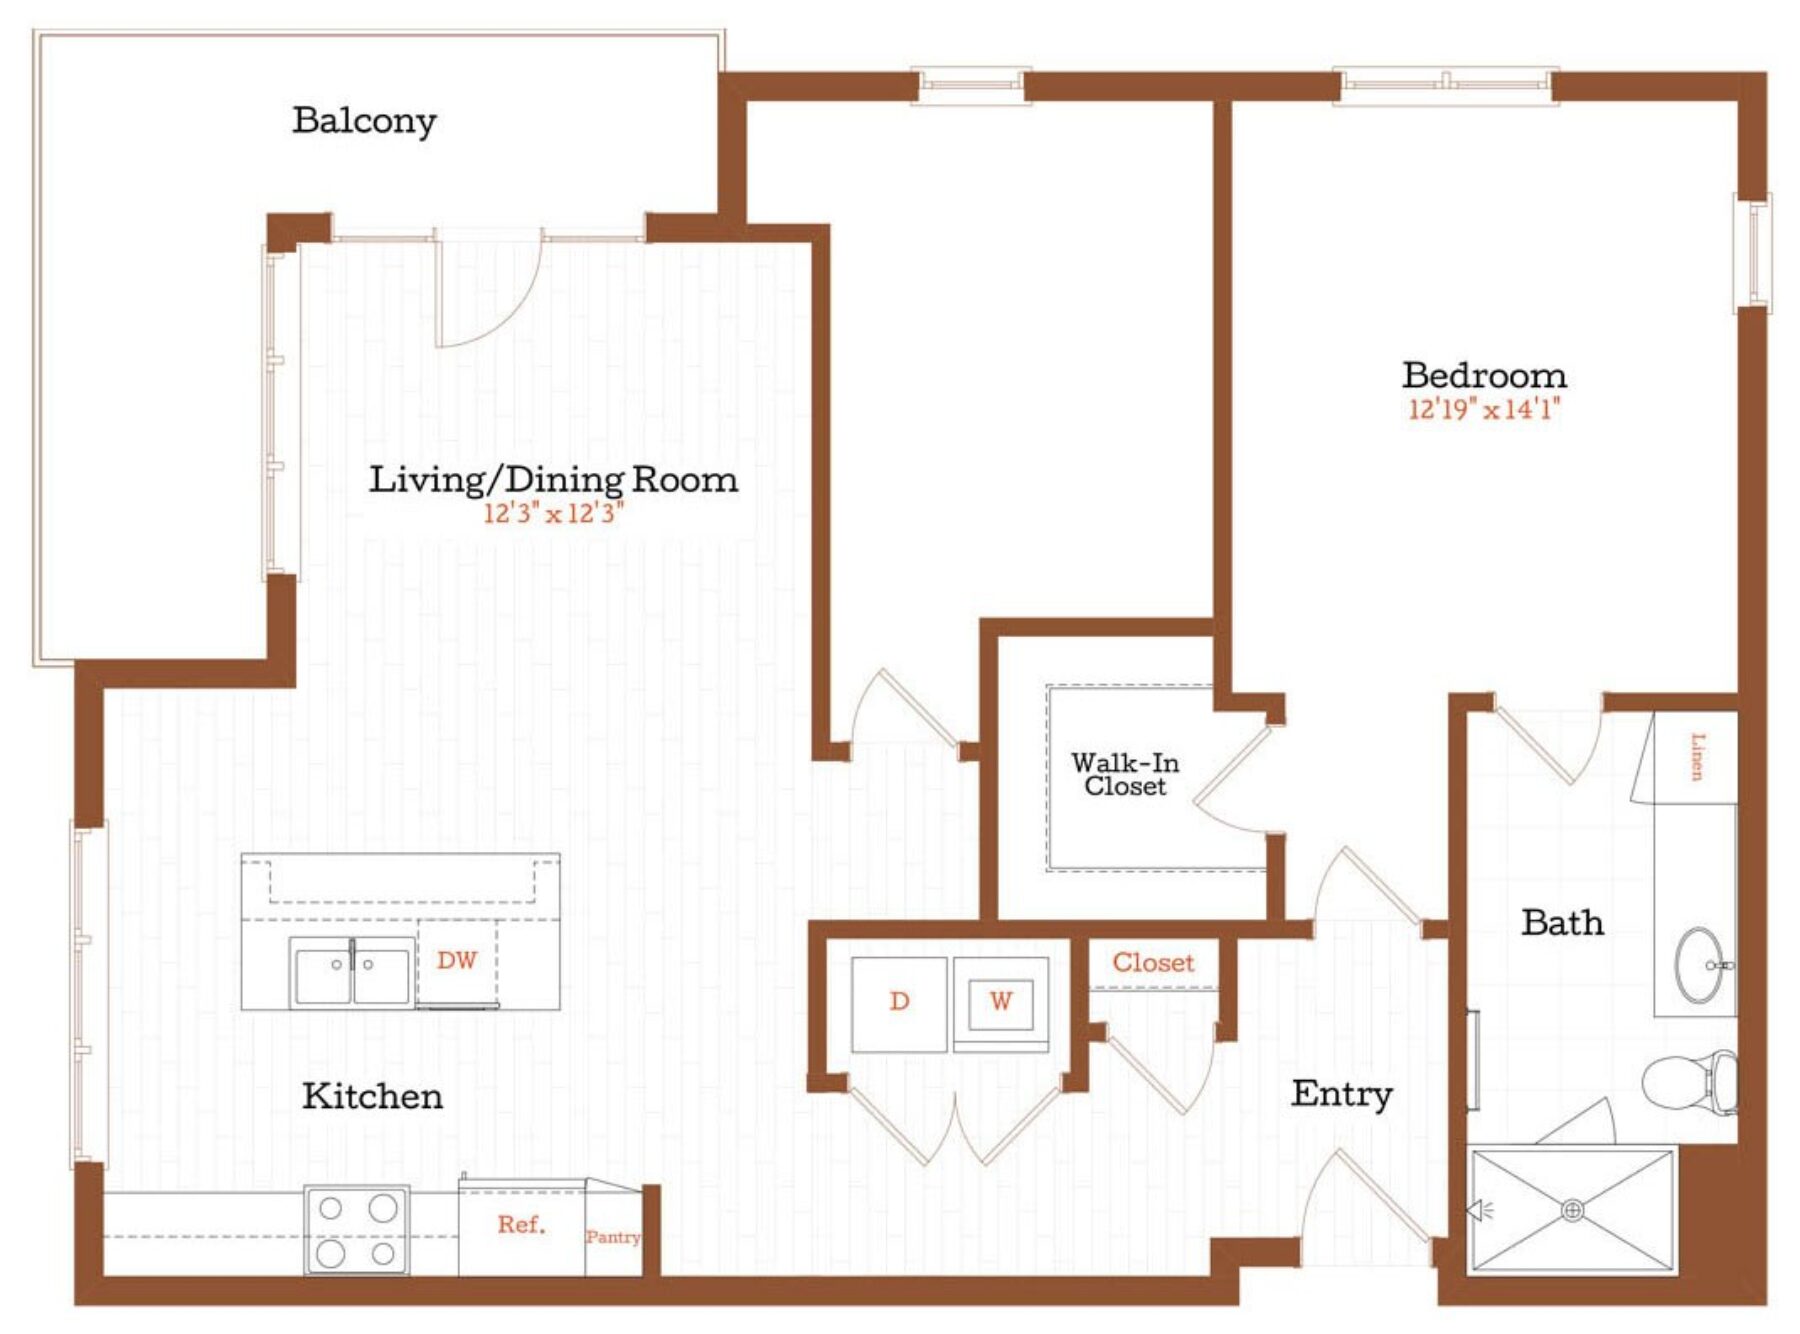 Plan Image: A9 - 1 Bedroom w/Balcony